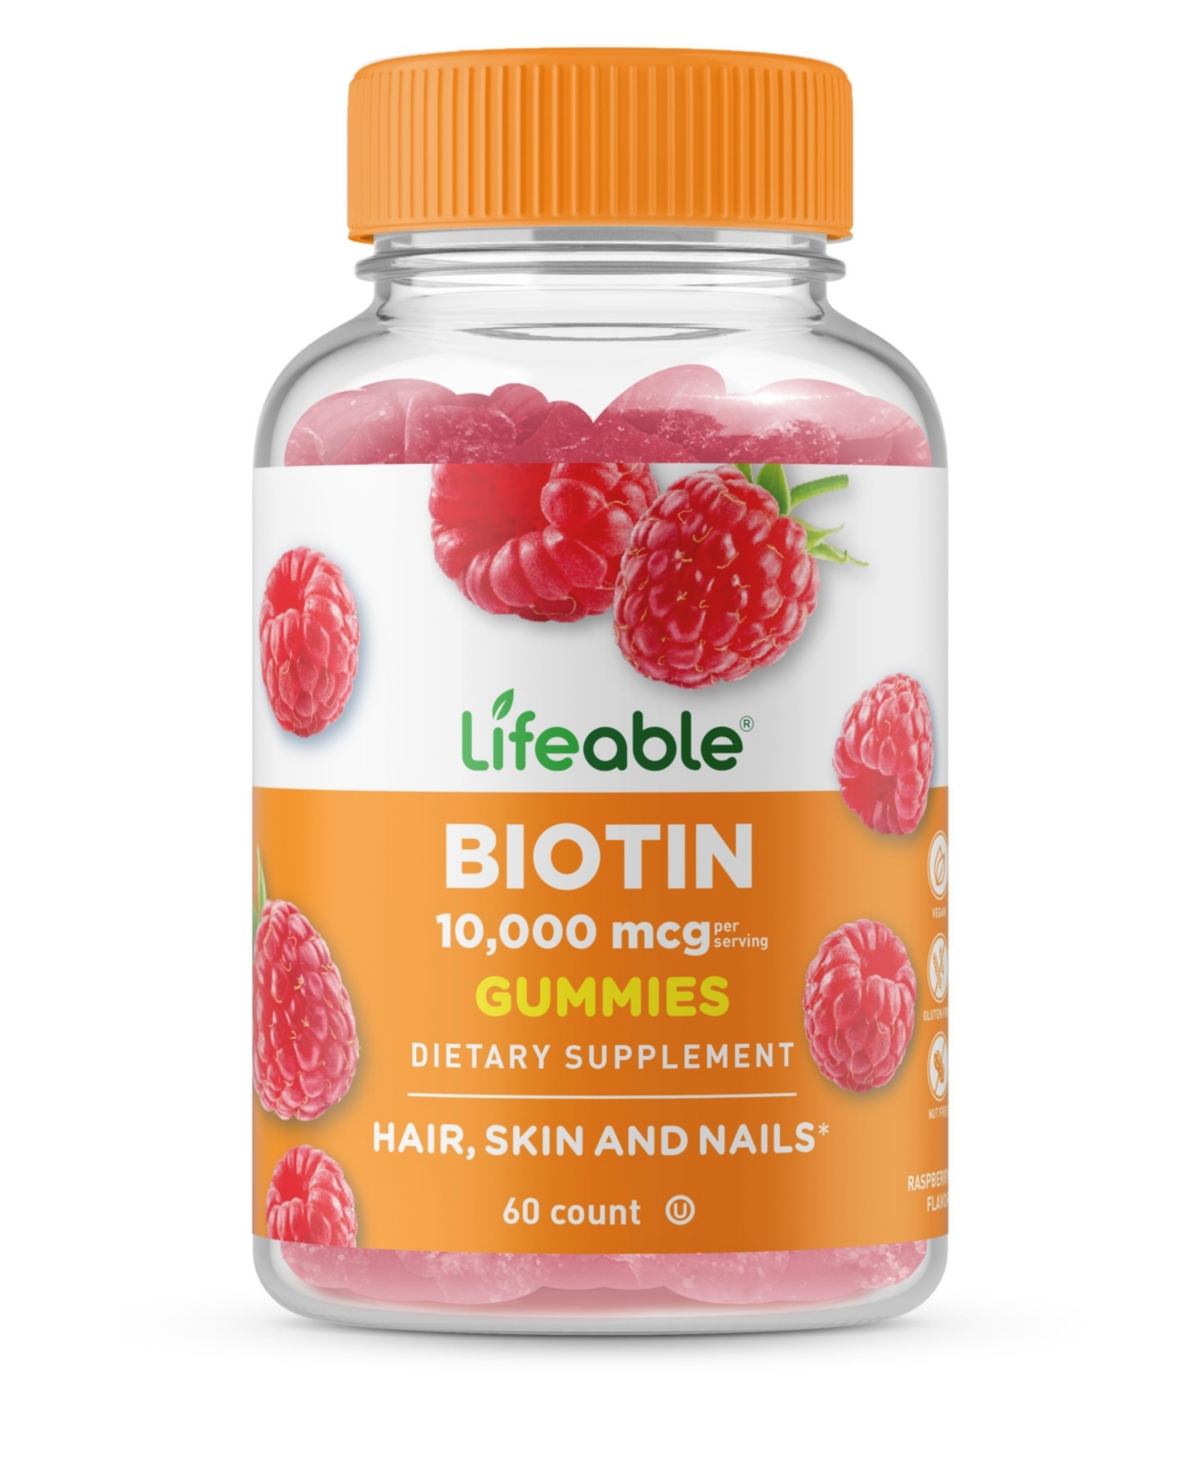 Biotin 10,000 mcg Gummies - Hair And Nail Growth - Great Tasting Natural Flavor, Dietary Supplement Vitamins - 60 Gummies - Open Miscellaneou